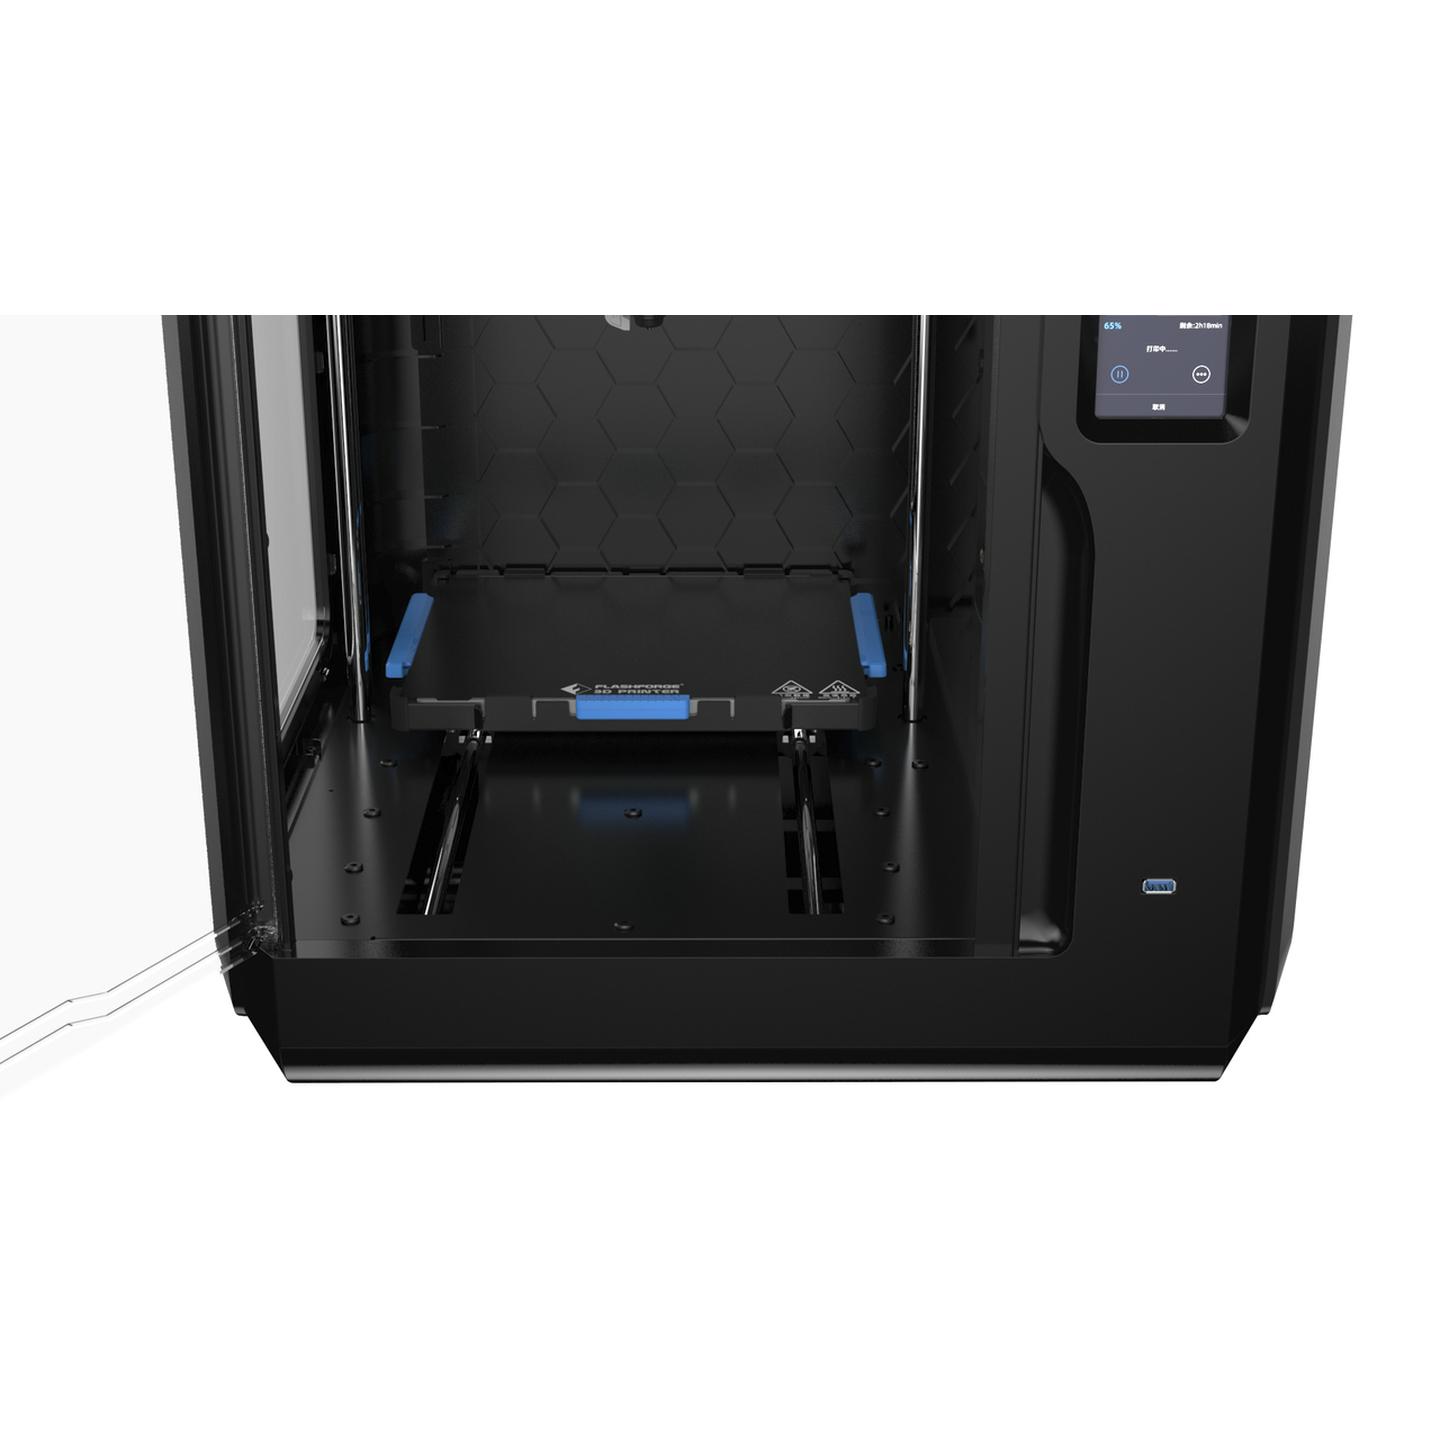 Flashforge Adventurer 4 PRO 3D Printer with Air Filter